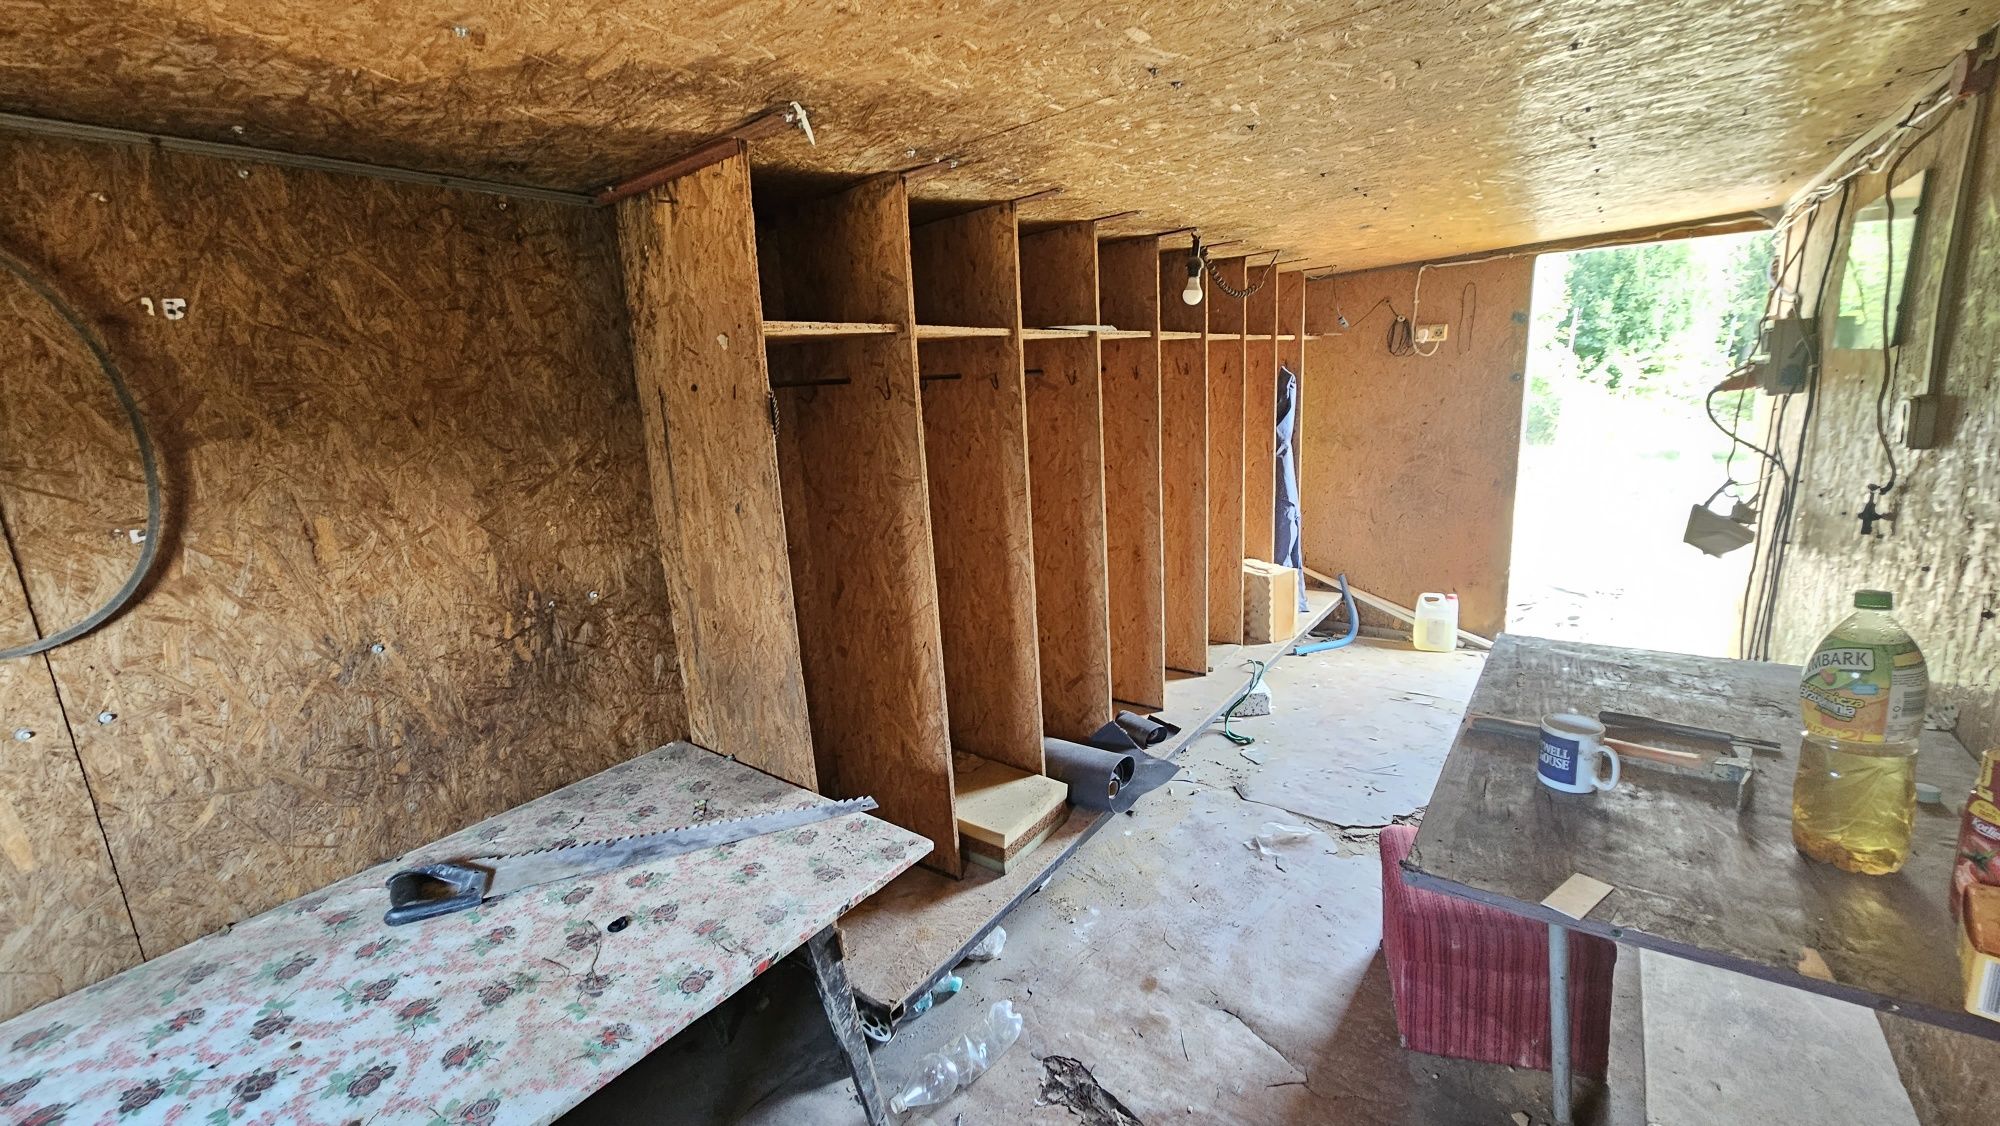 Barakowóz pakamera mobilny magazyn budowlany biuro budowy barak